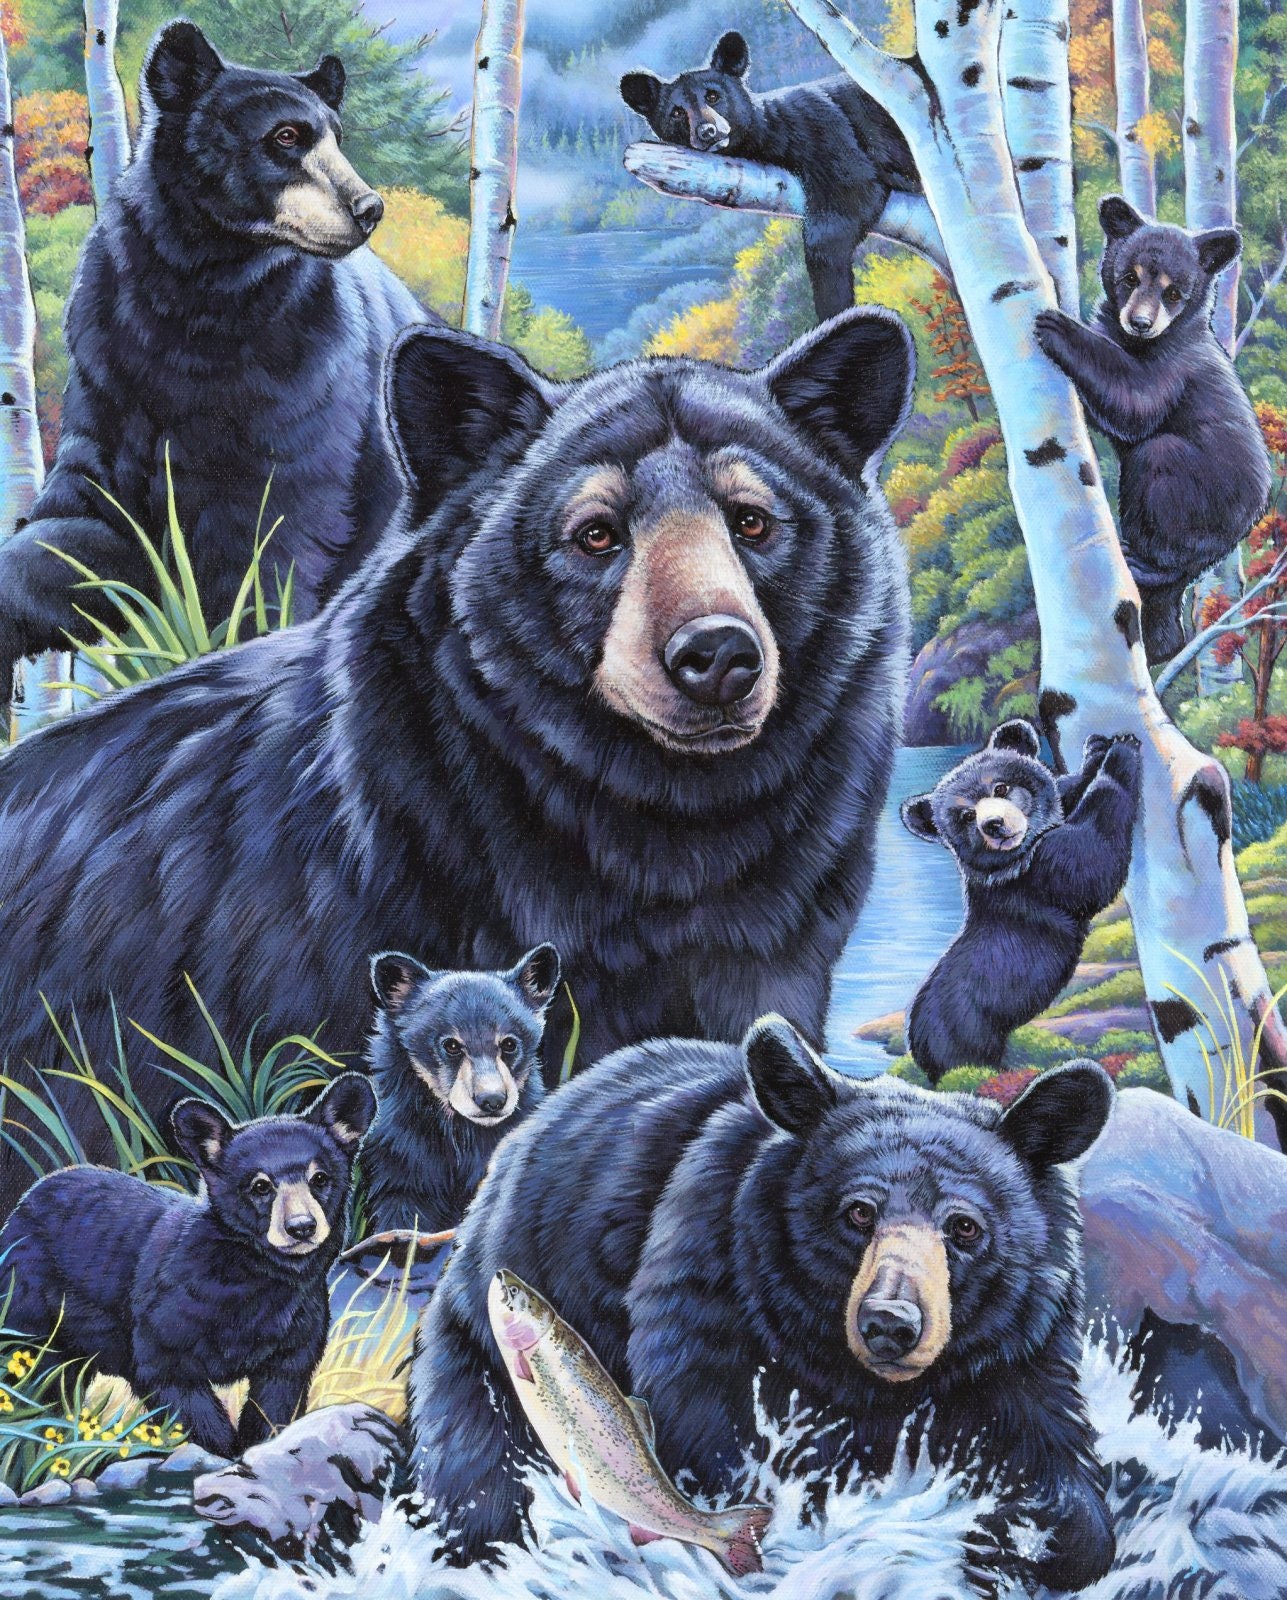 Lodge Wildlife Series-Brown Bear Cast Iron Skillet 12 in. Black